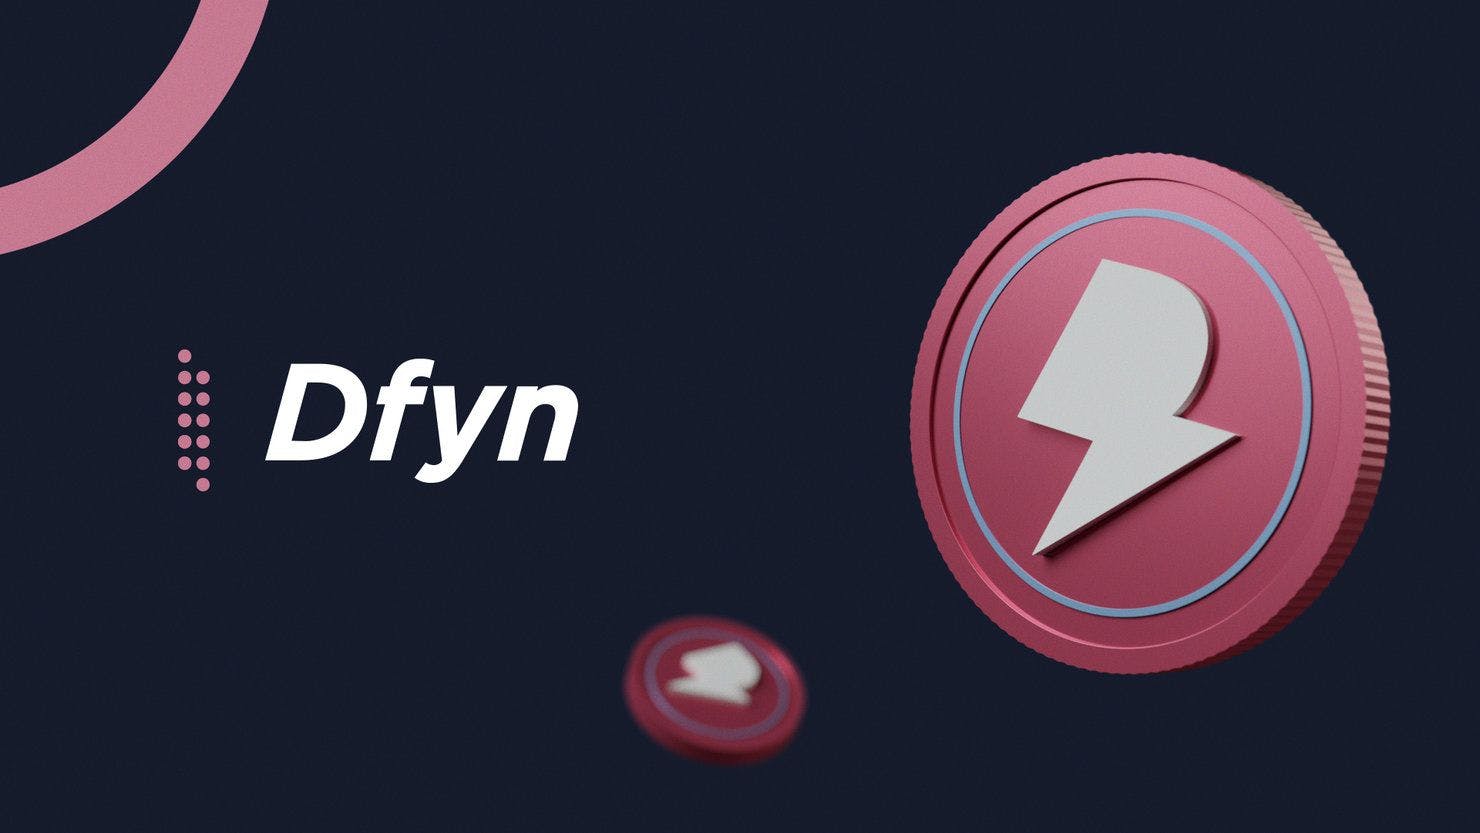 Dfyn Network Image #1